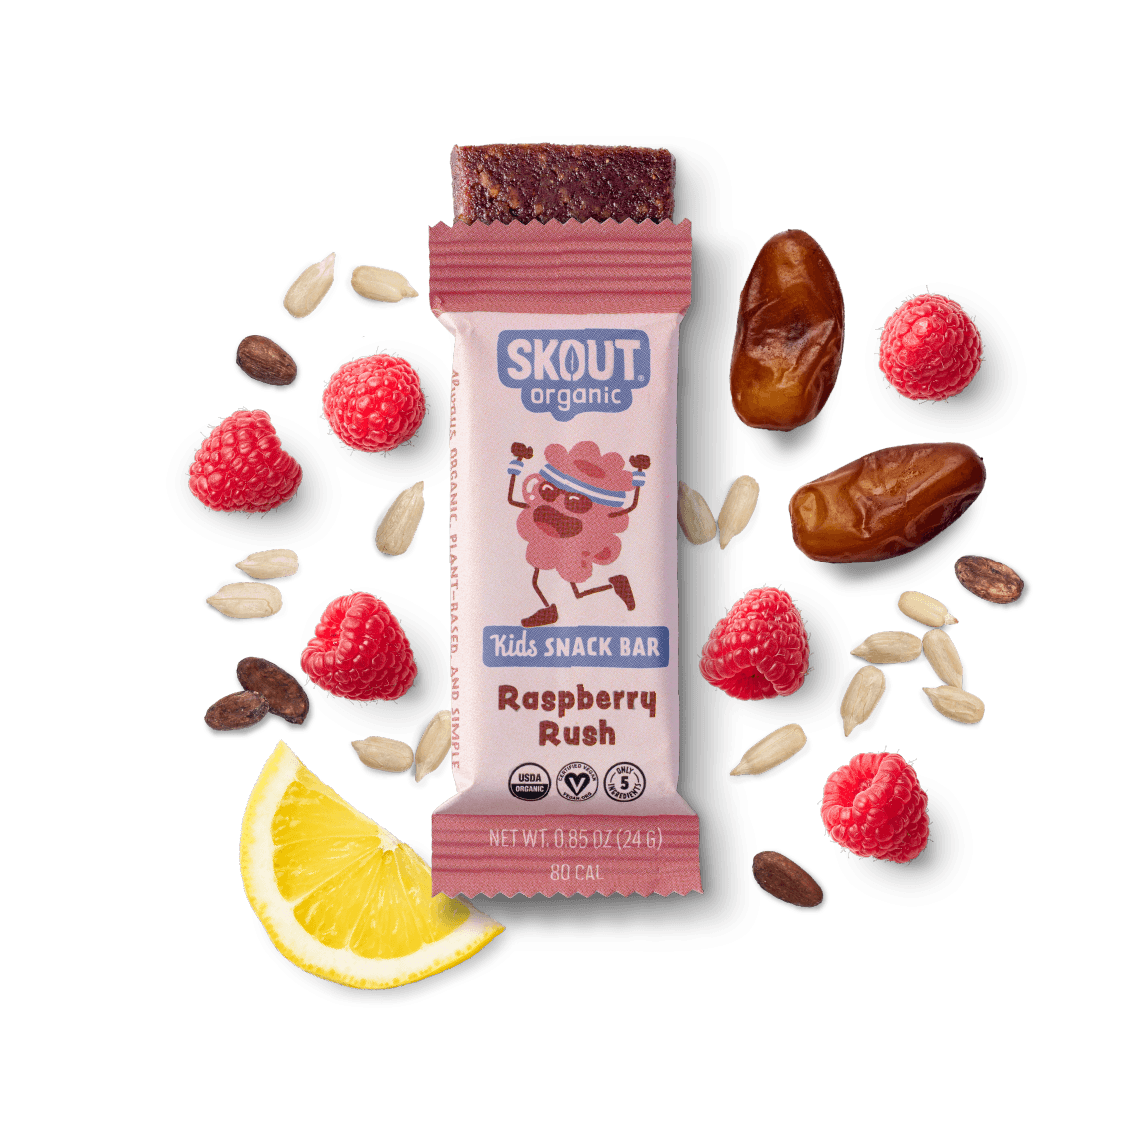 Skout Organic Raspberry Rush Kids Bar by Skout Organic